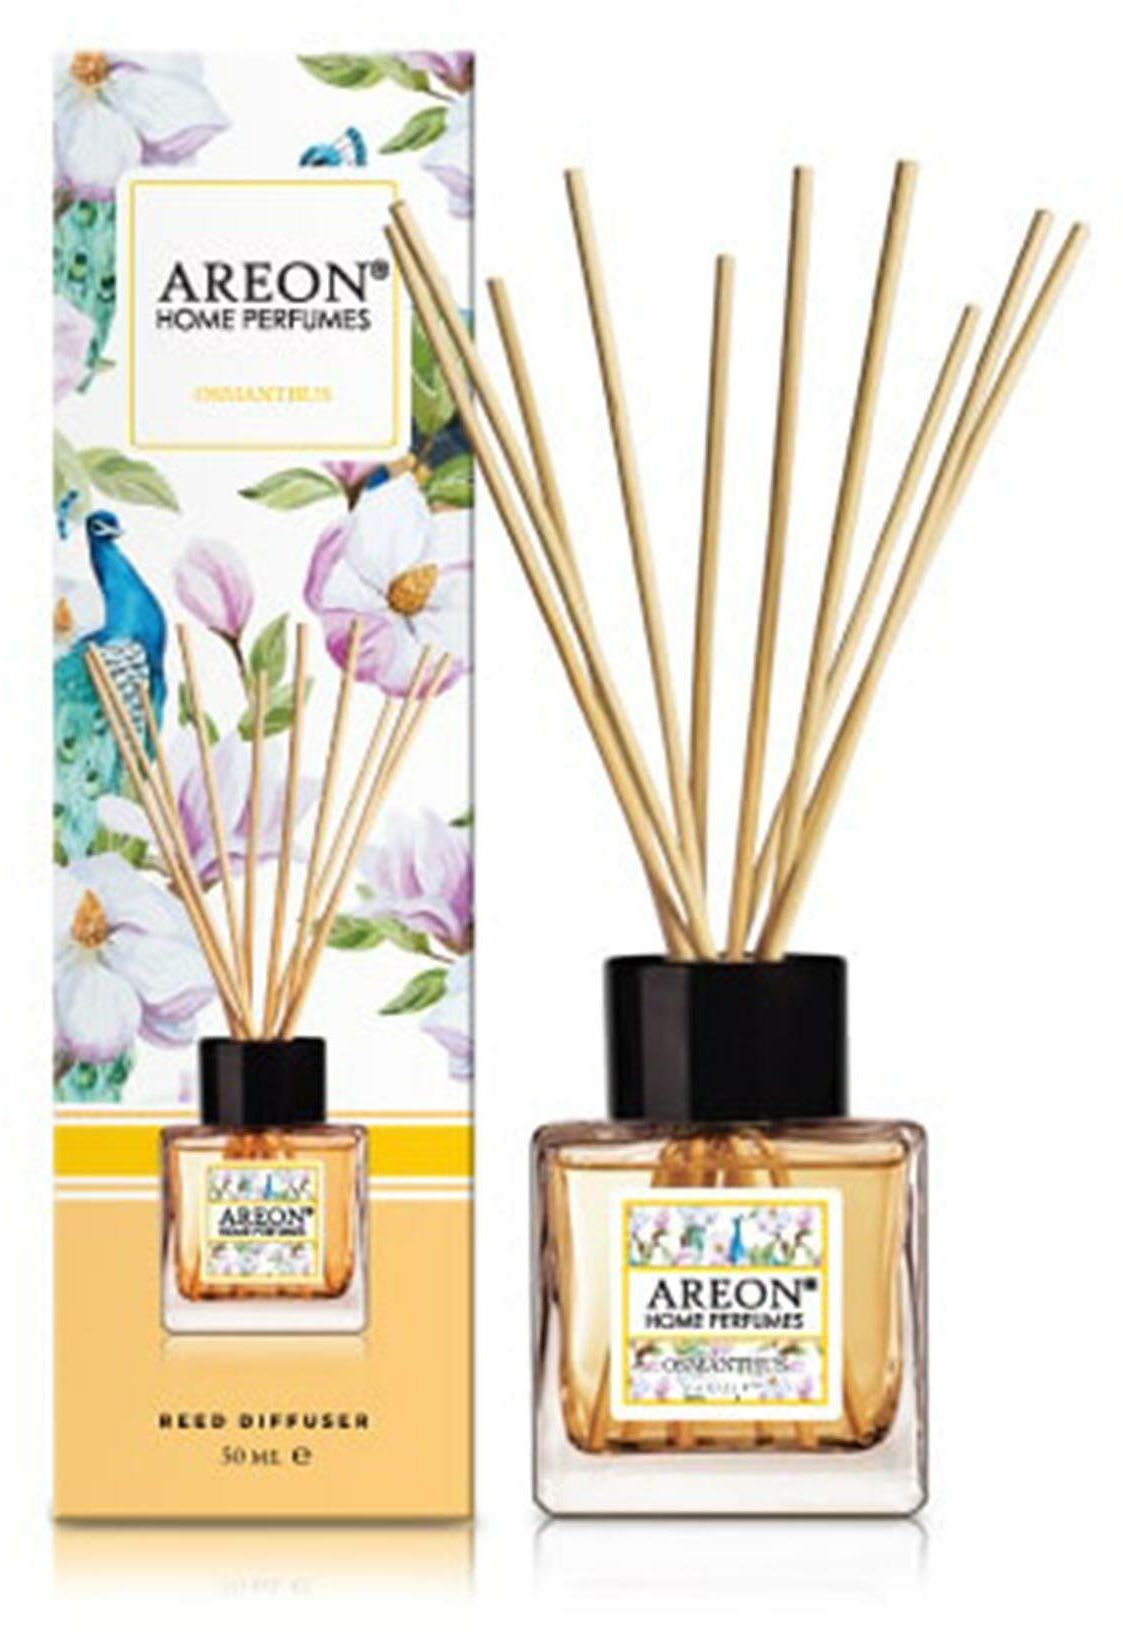 Areon home perfume osmanthus 50 ml